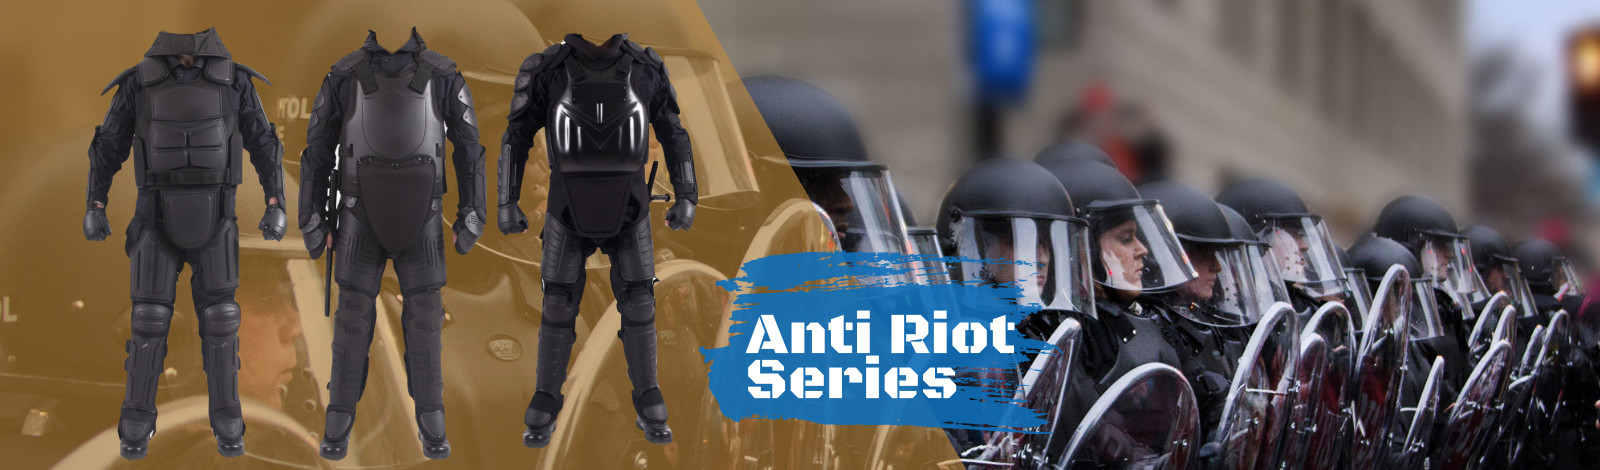 Armor Anti Riot